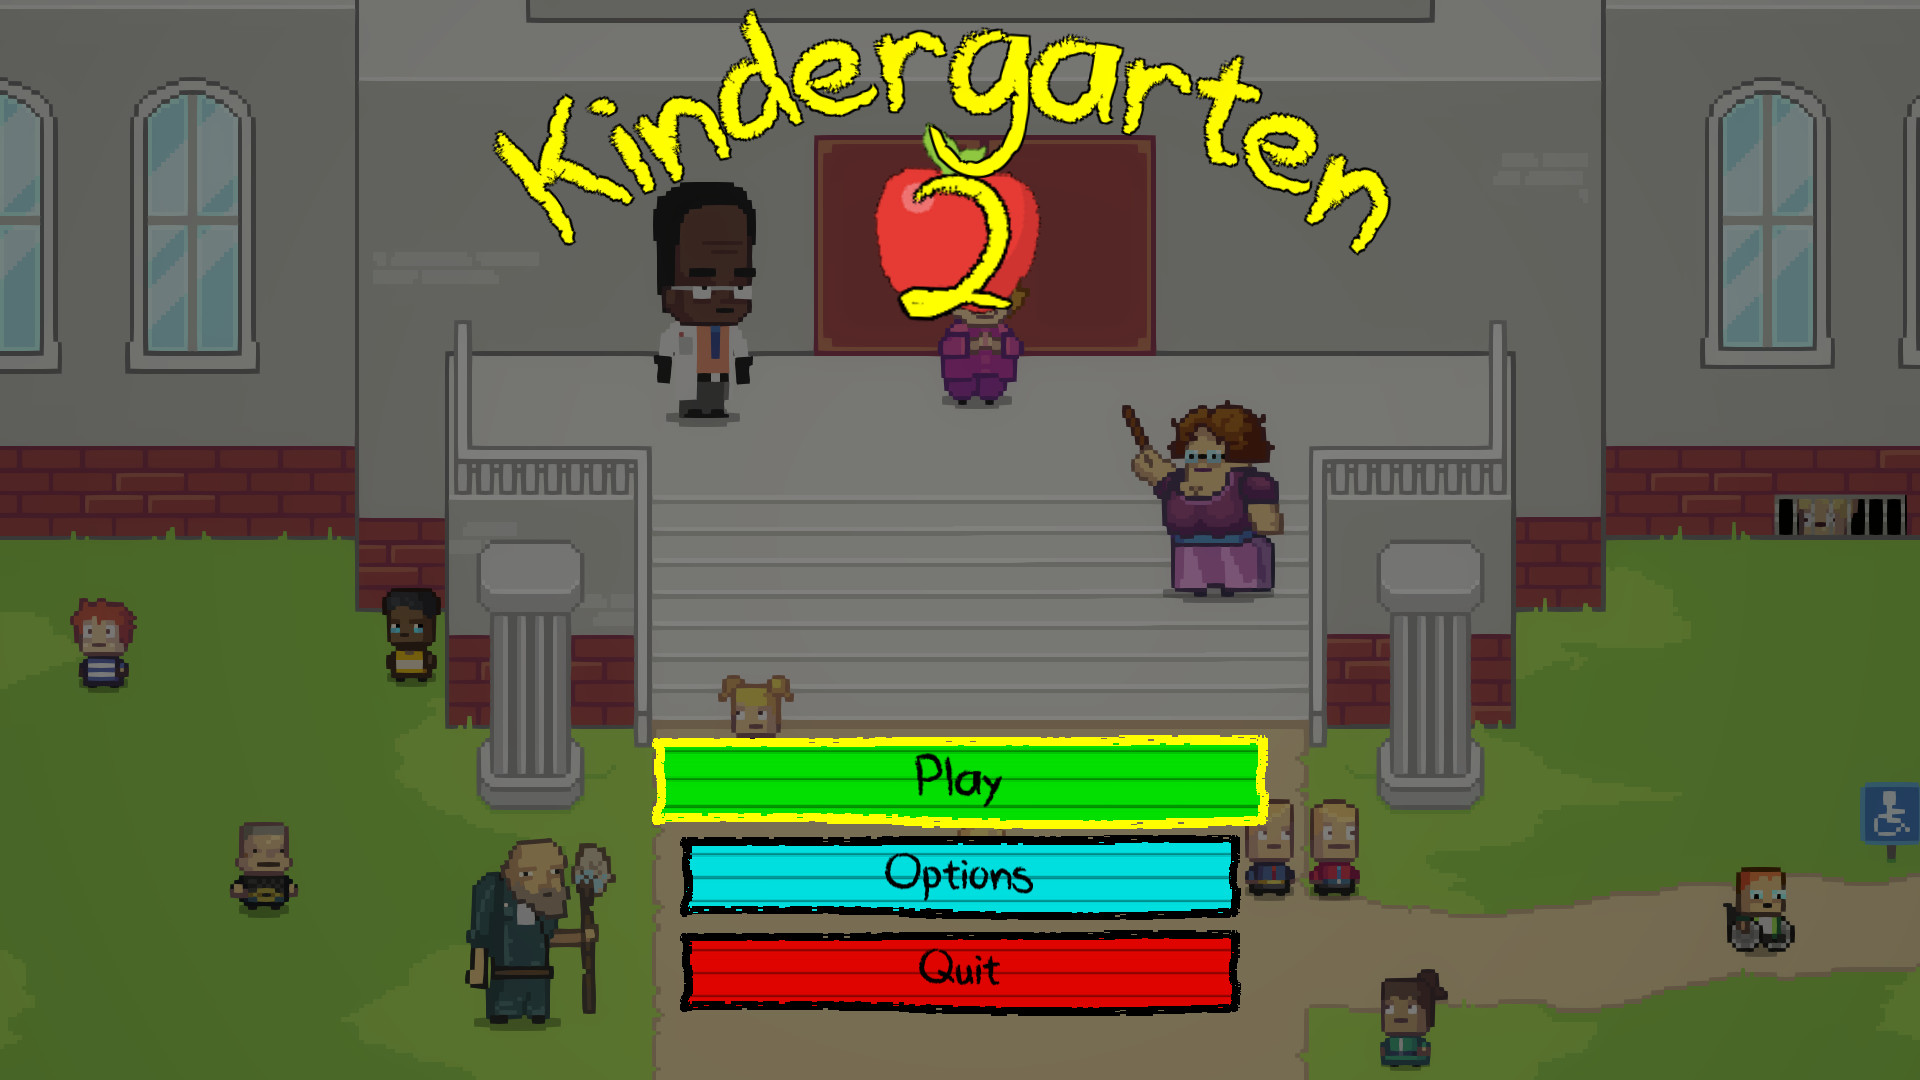 kindergarten 2 the game porn